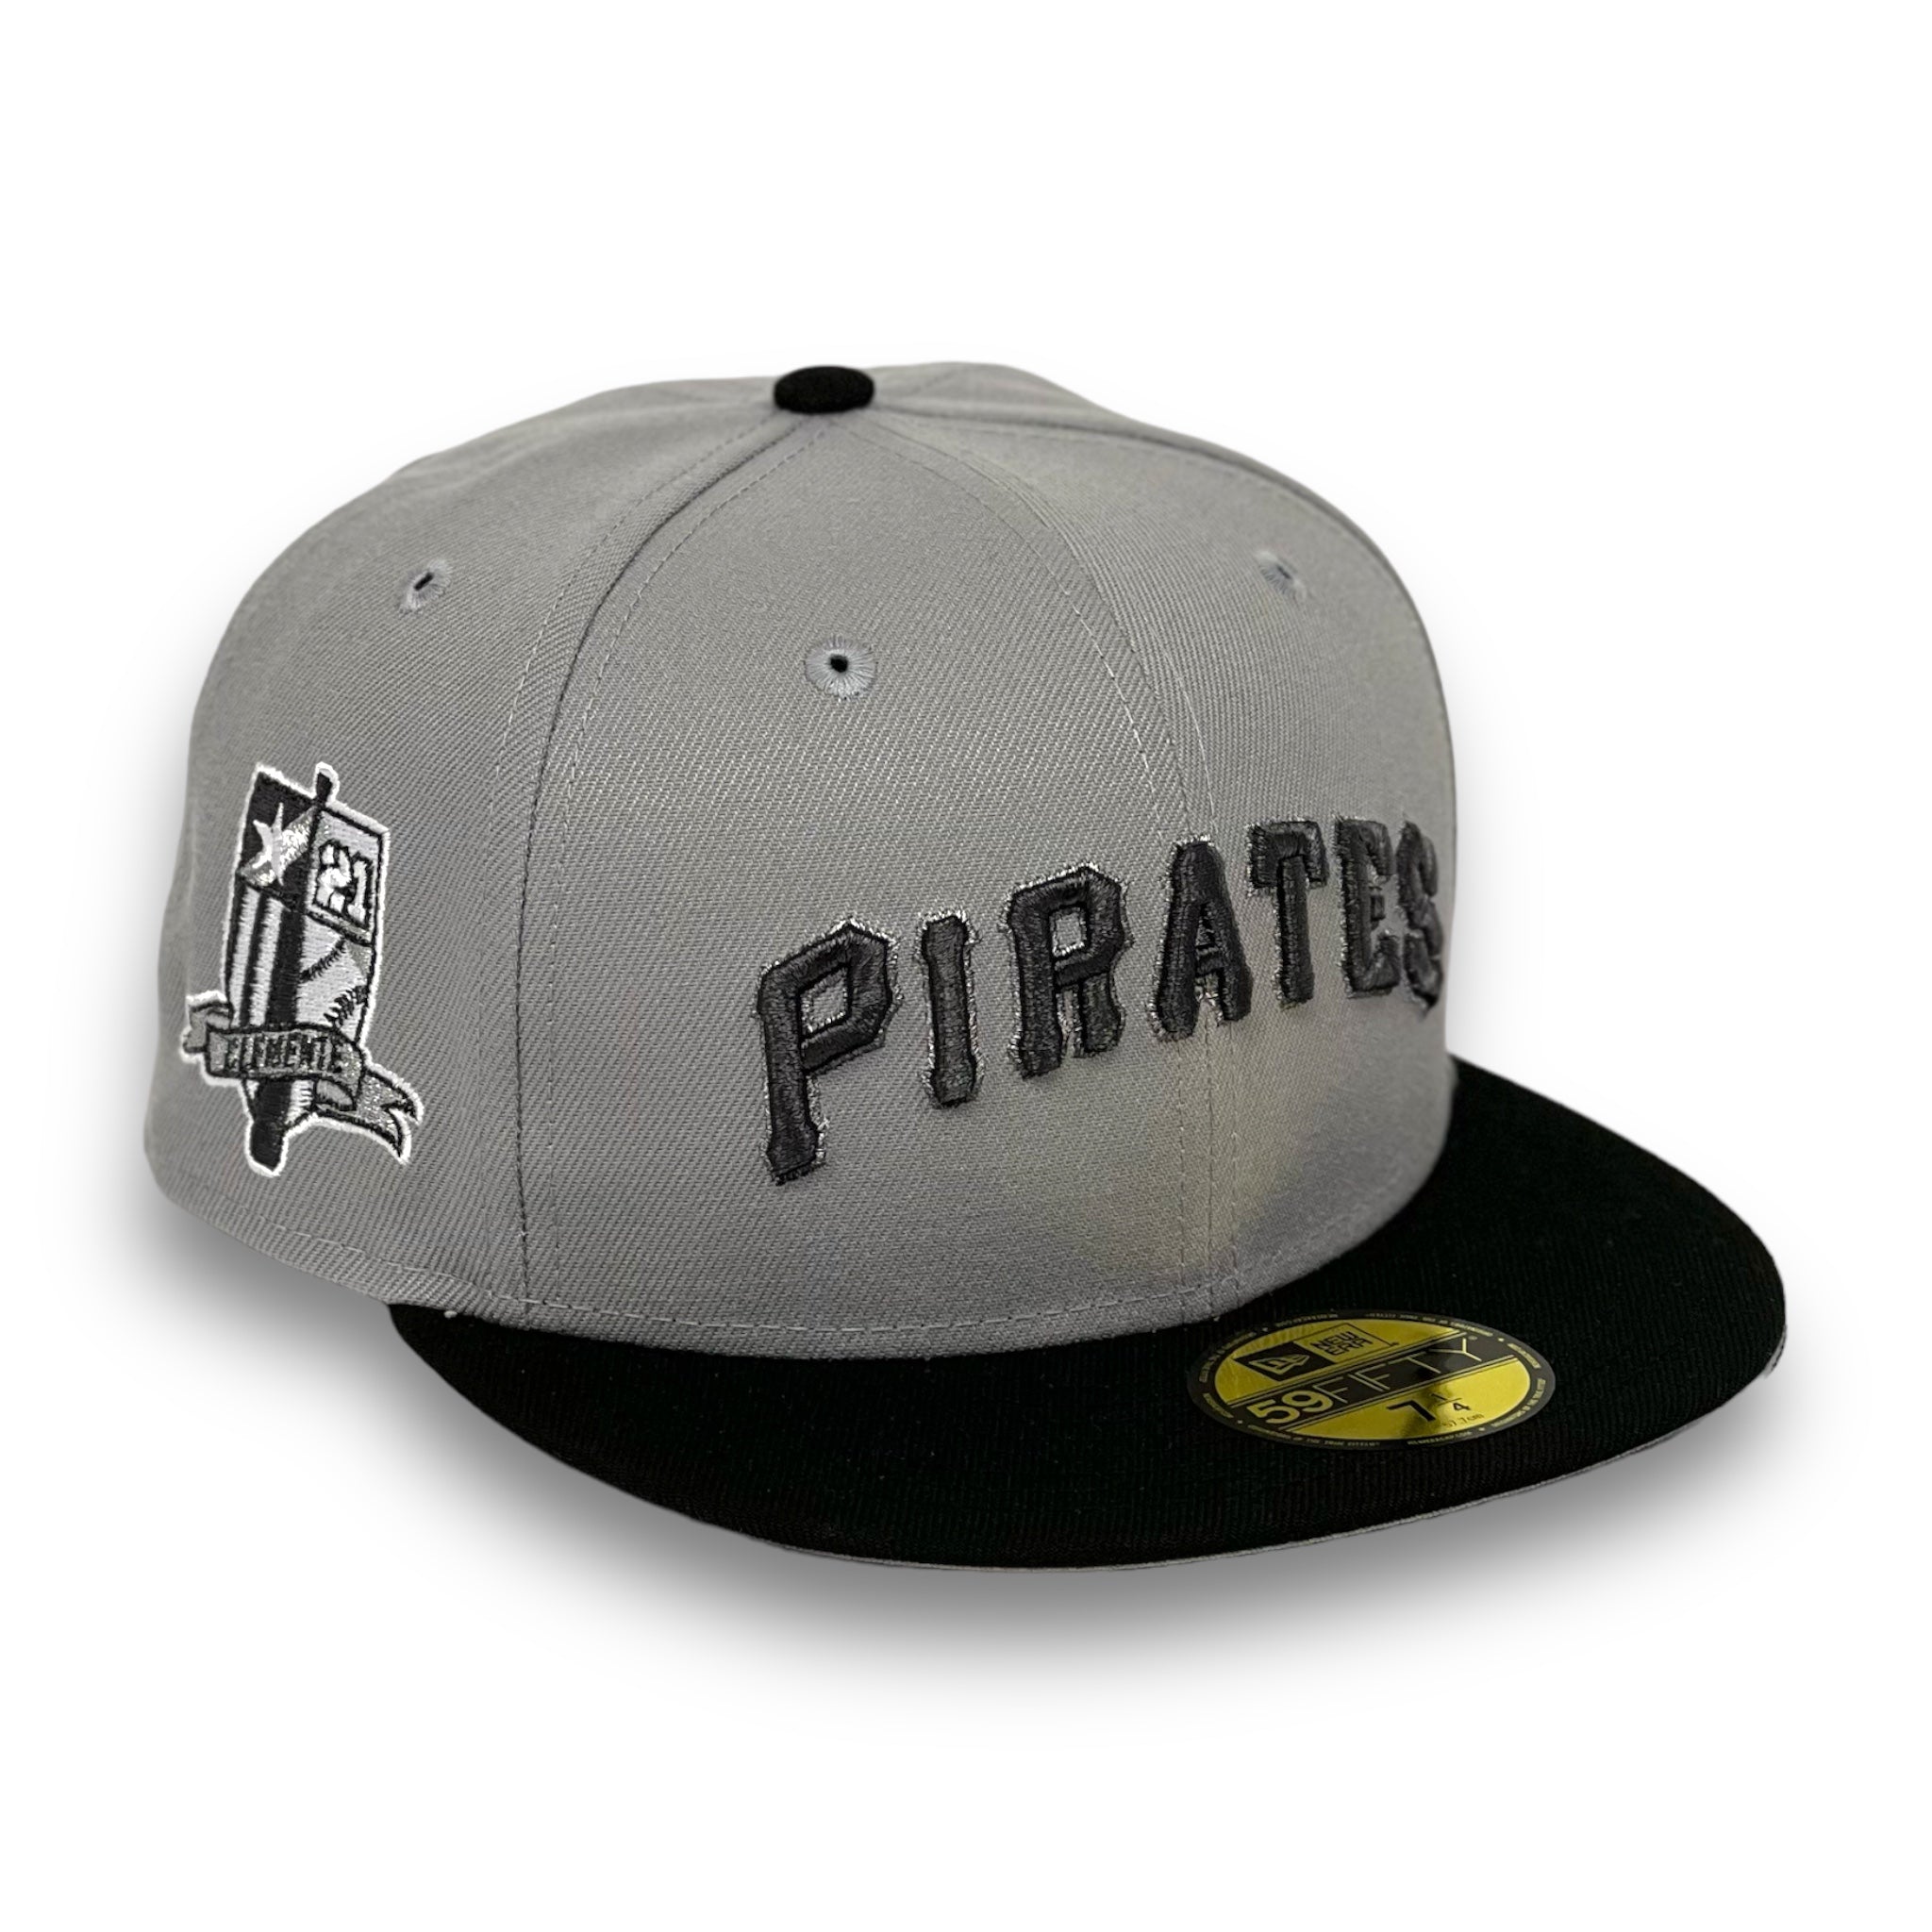 Pittsburgh Pirates MLB snapback New Era neon orange cap